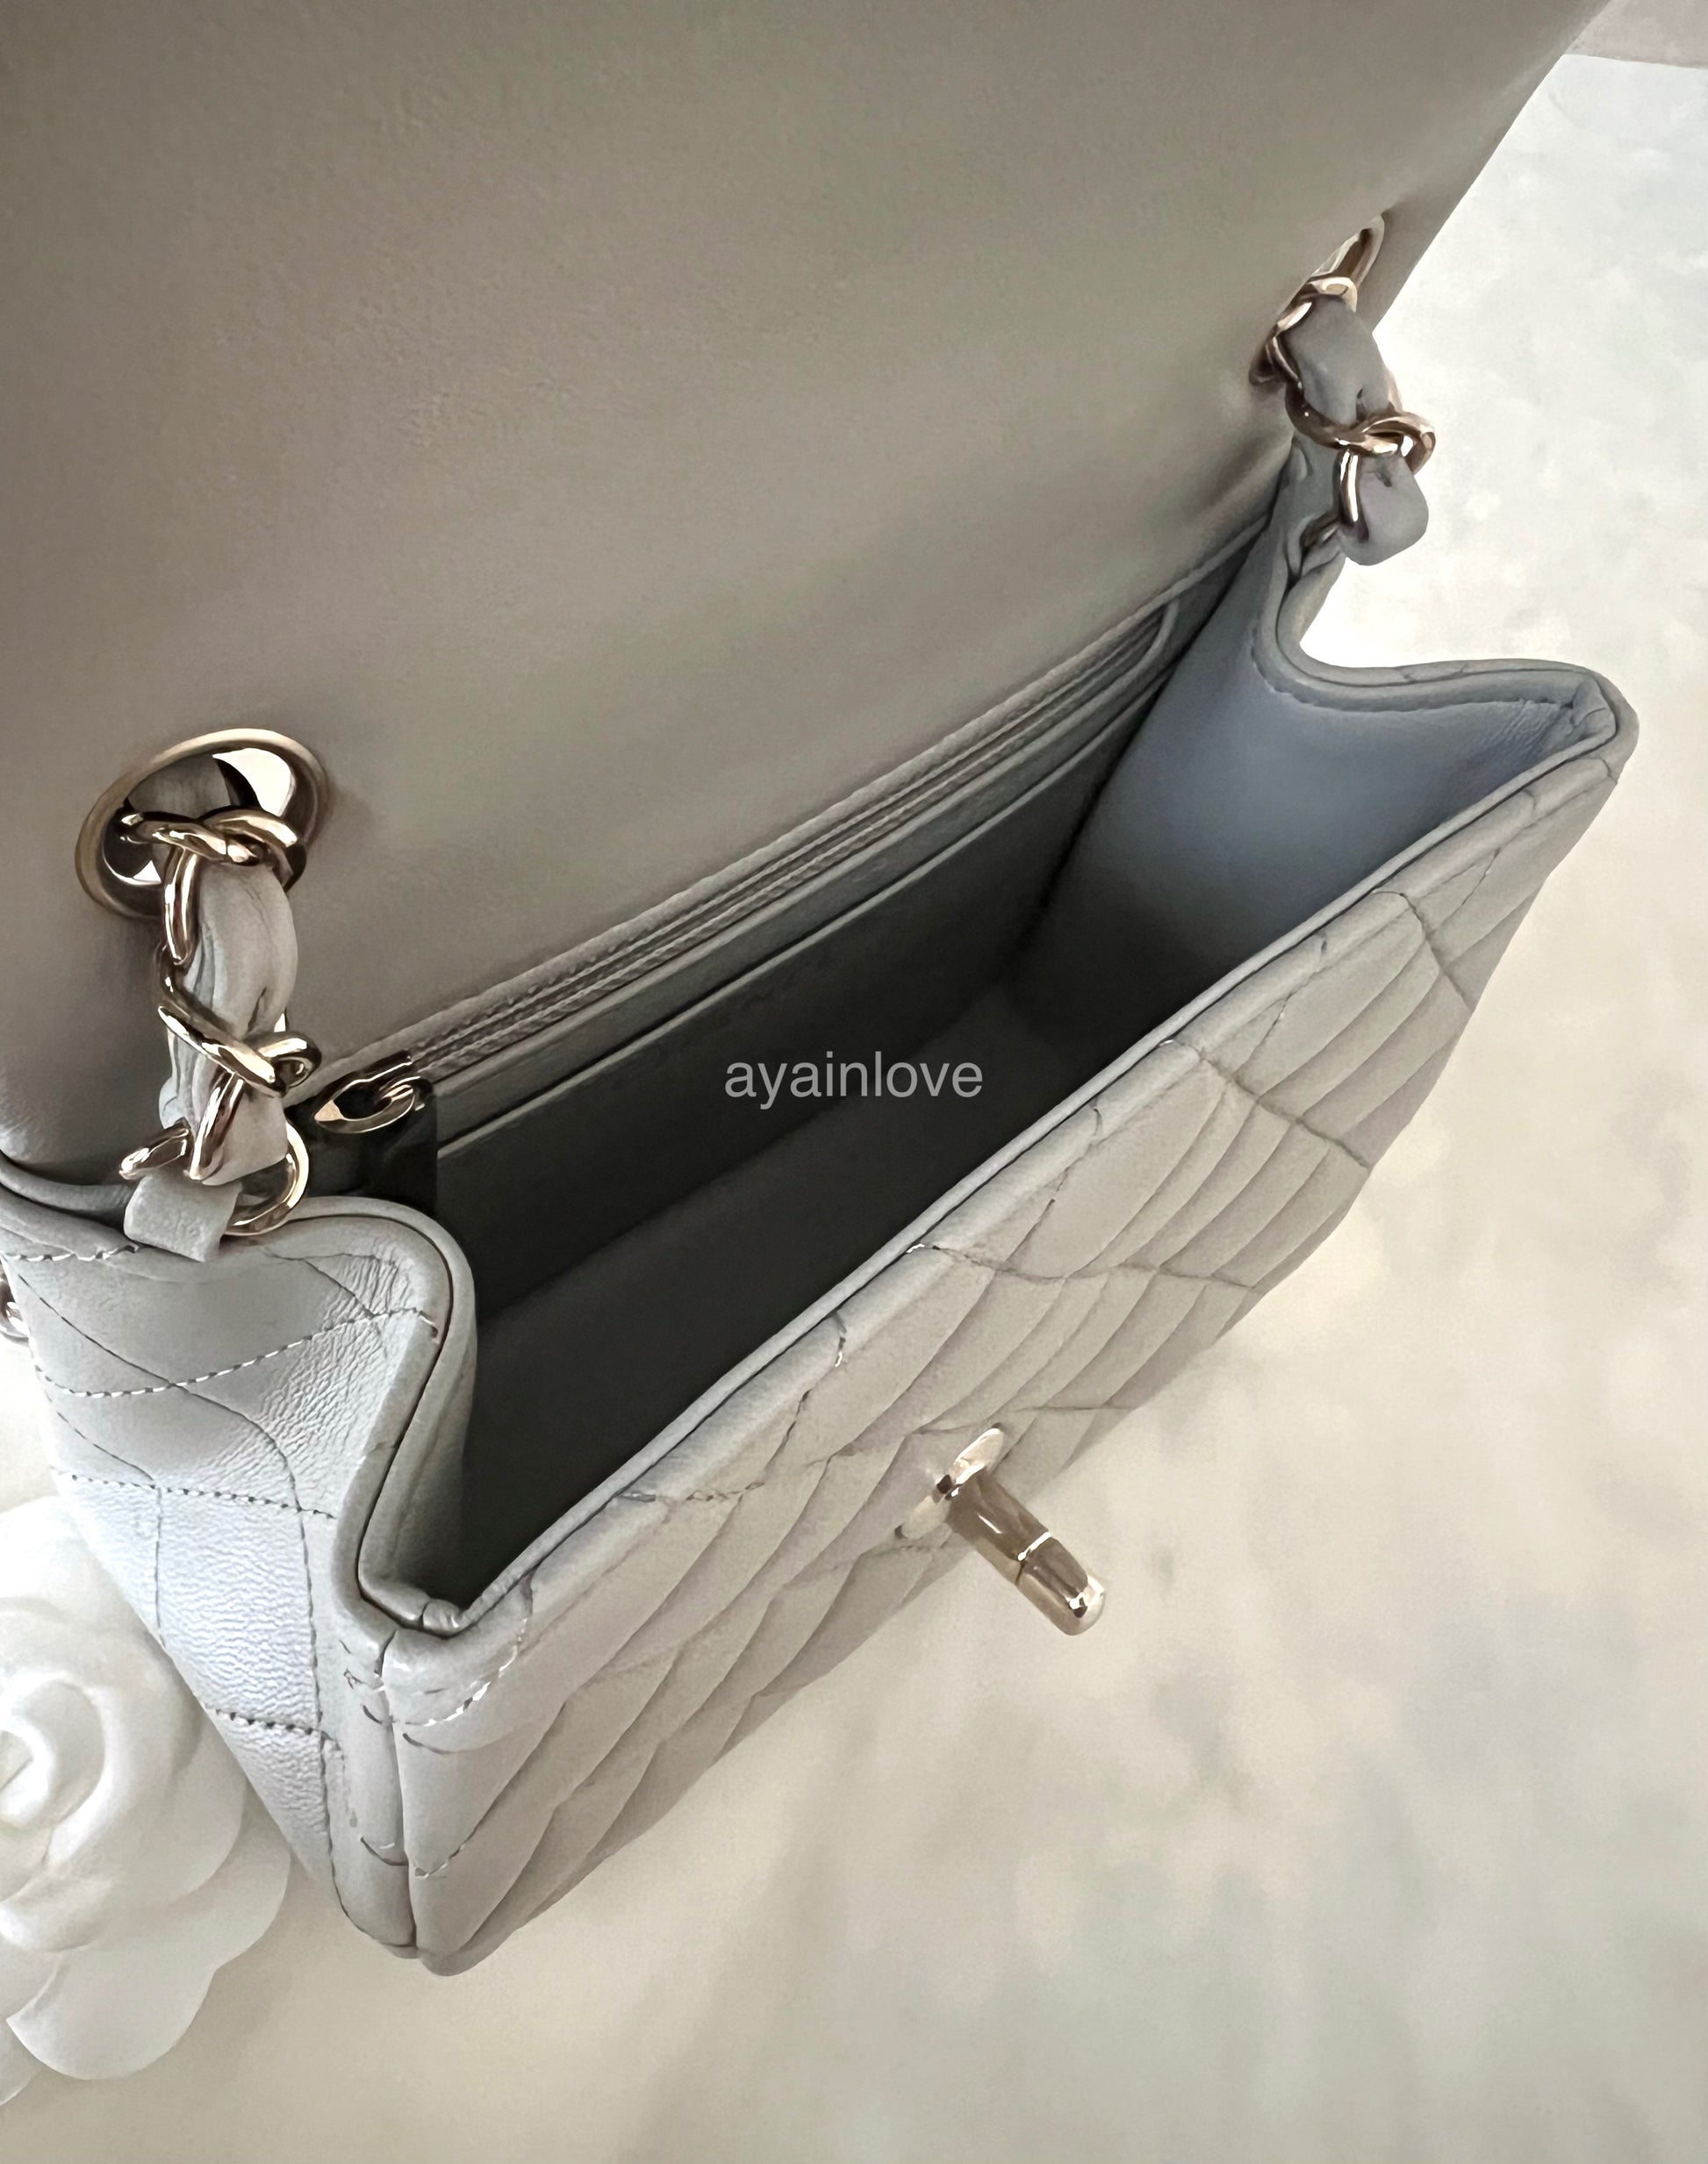 Brand new CHANEL Classic Mini Flap Bag 22C Light Gray Handbag Lamb Skin  Leather